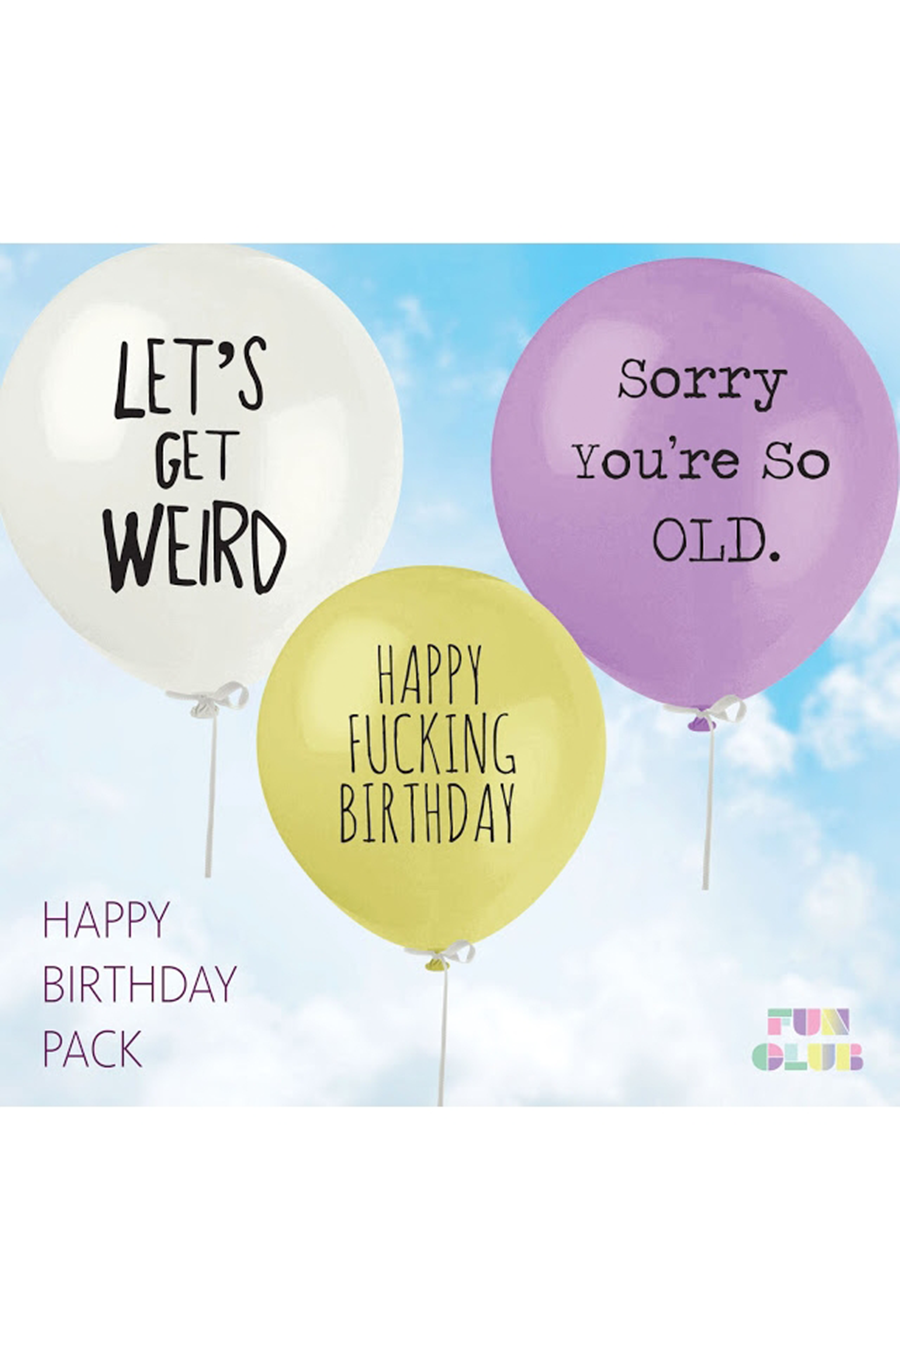 Happy Fucking Birthday Balloon Pack - Main Image Number 1 of 2